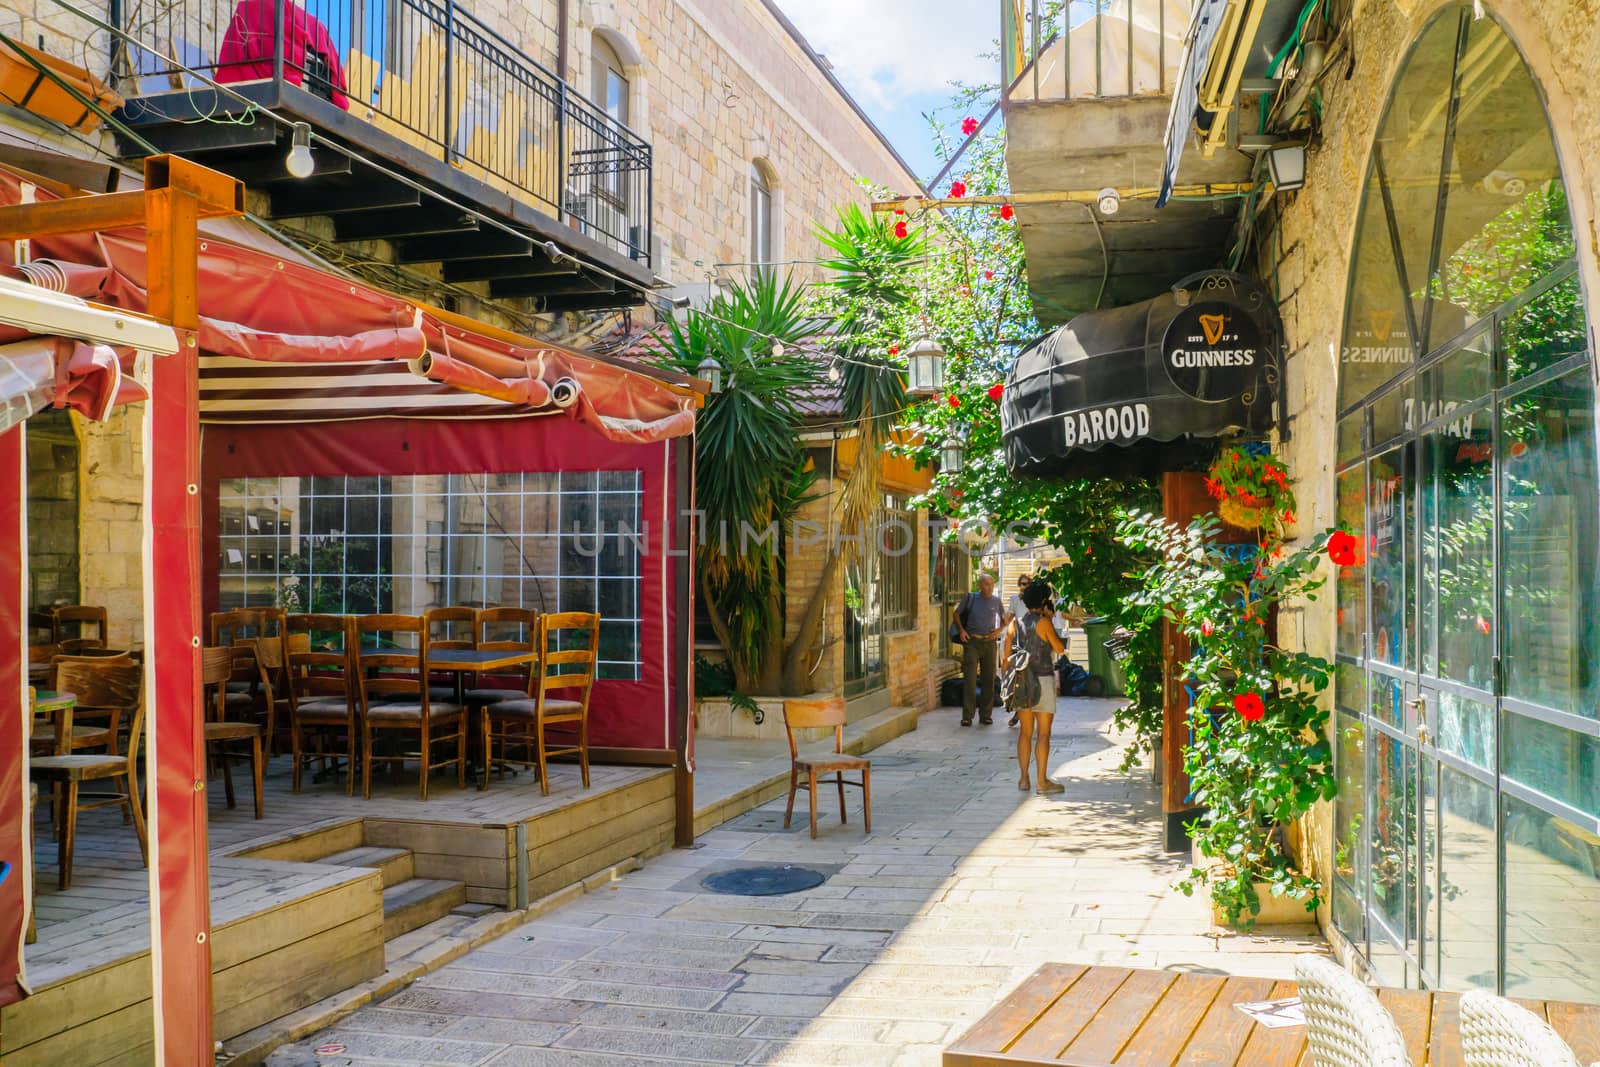 JERUSALEM, ISRAEL - SEPTEMBER 23, 2016: Scene of the Feingold courtyard, with restaurants, locals and visitors, in Jerusalem, Israel